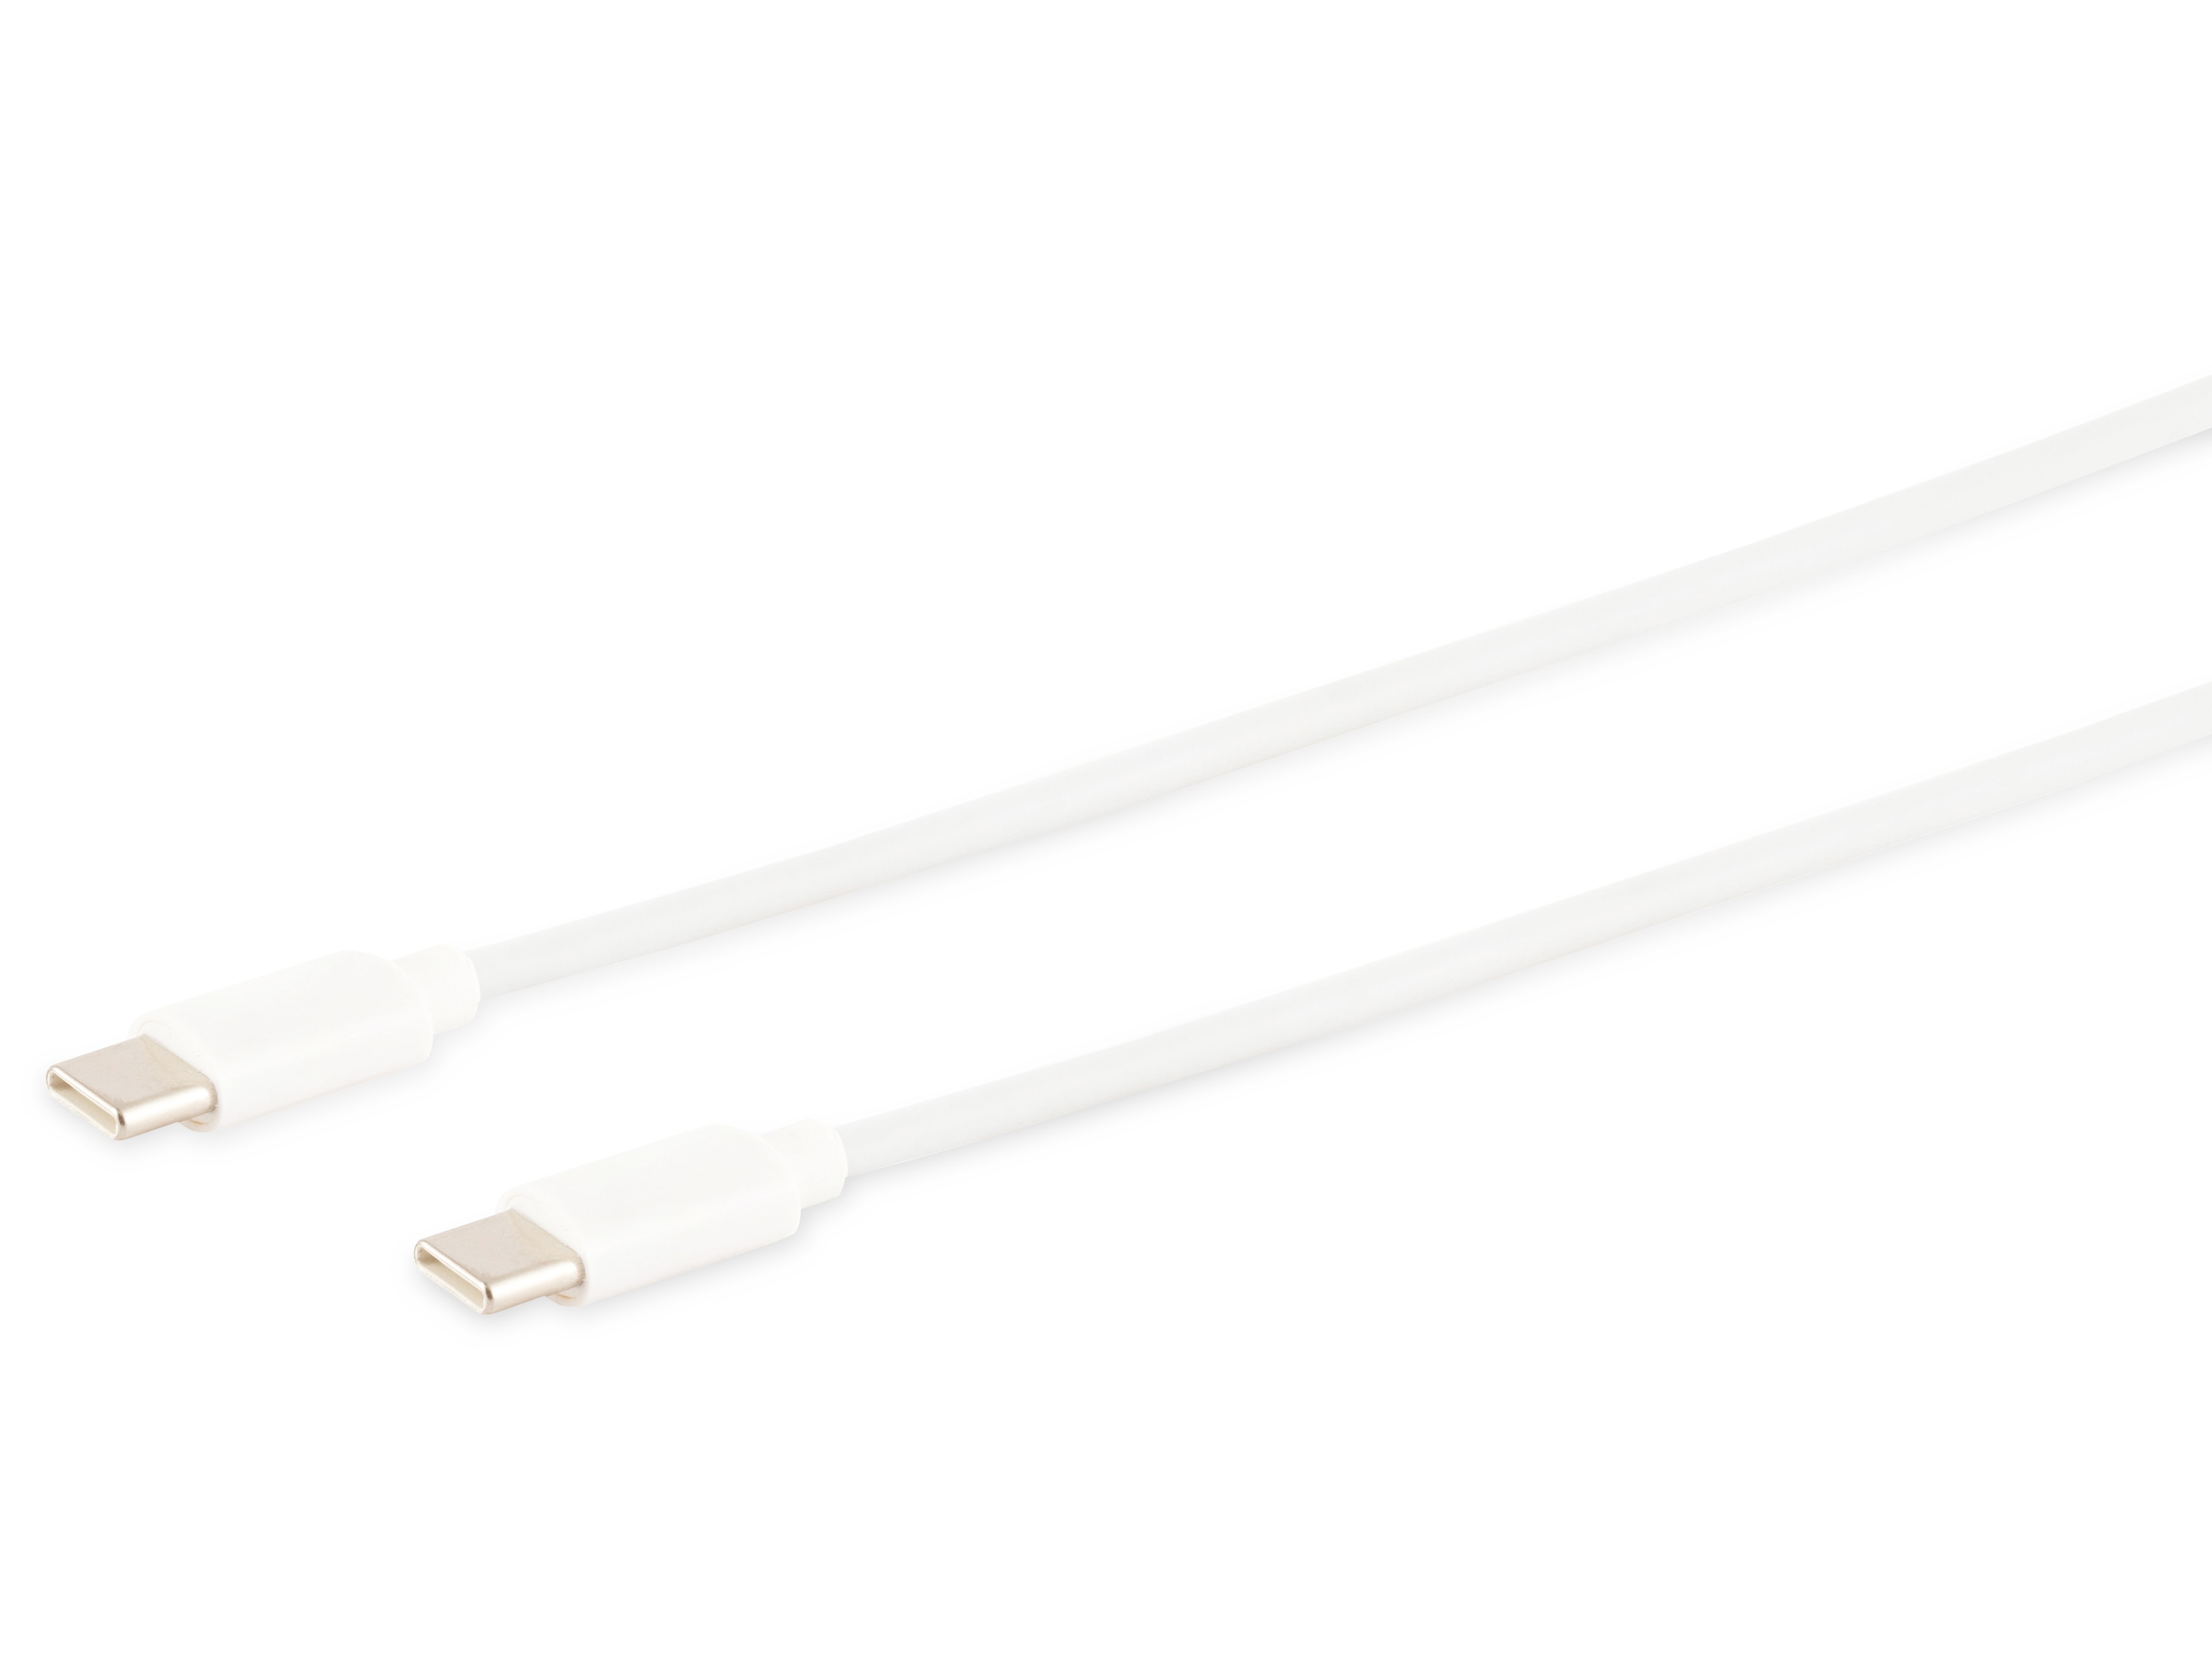 S-IMPULS USB-C Ladekabel, 2.0, ABS, weiß, 0,5 m